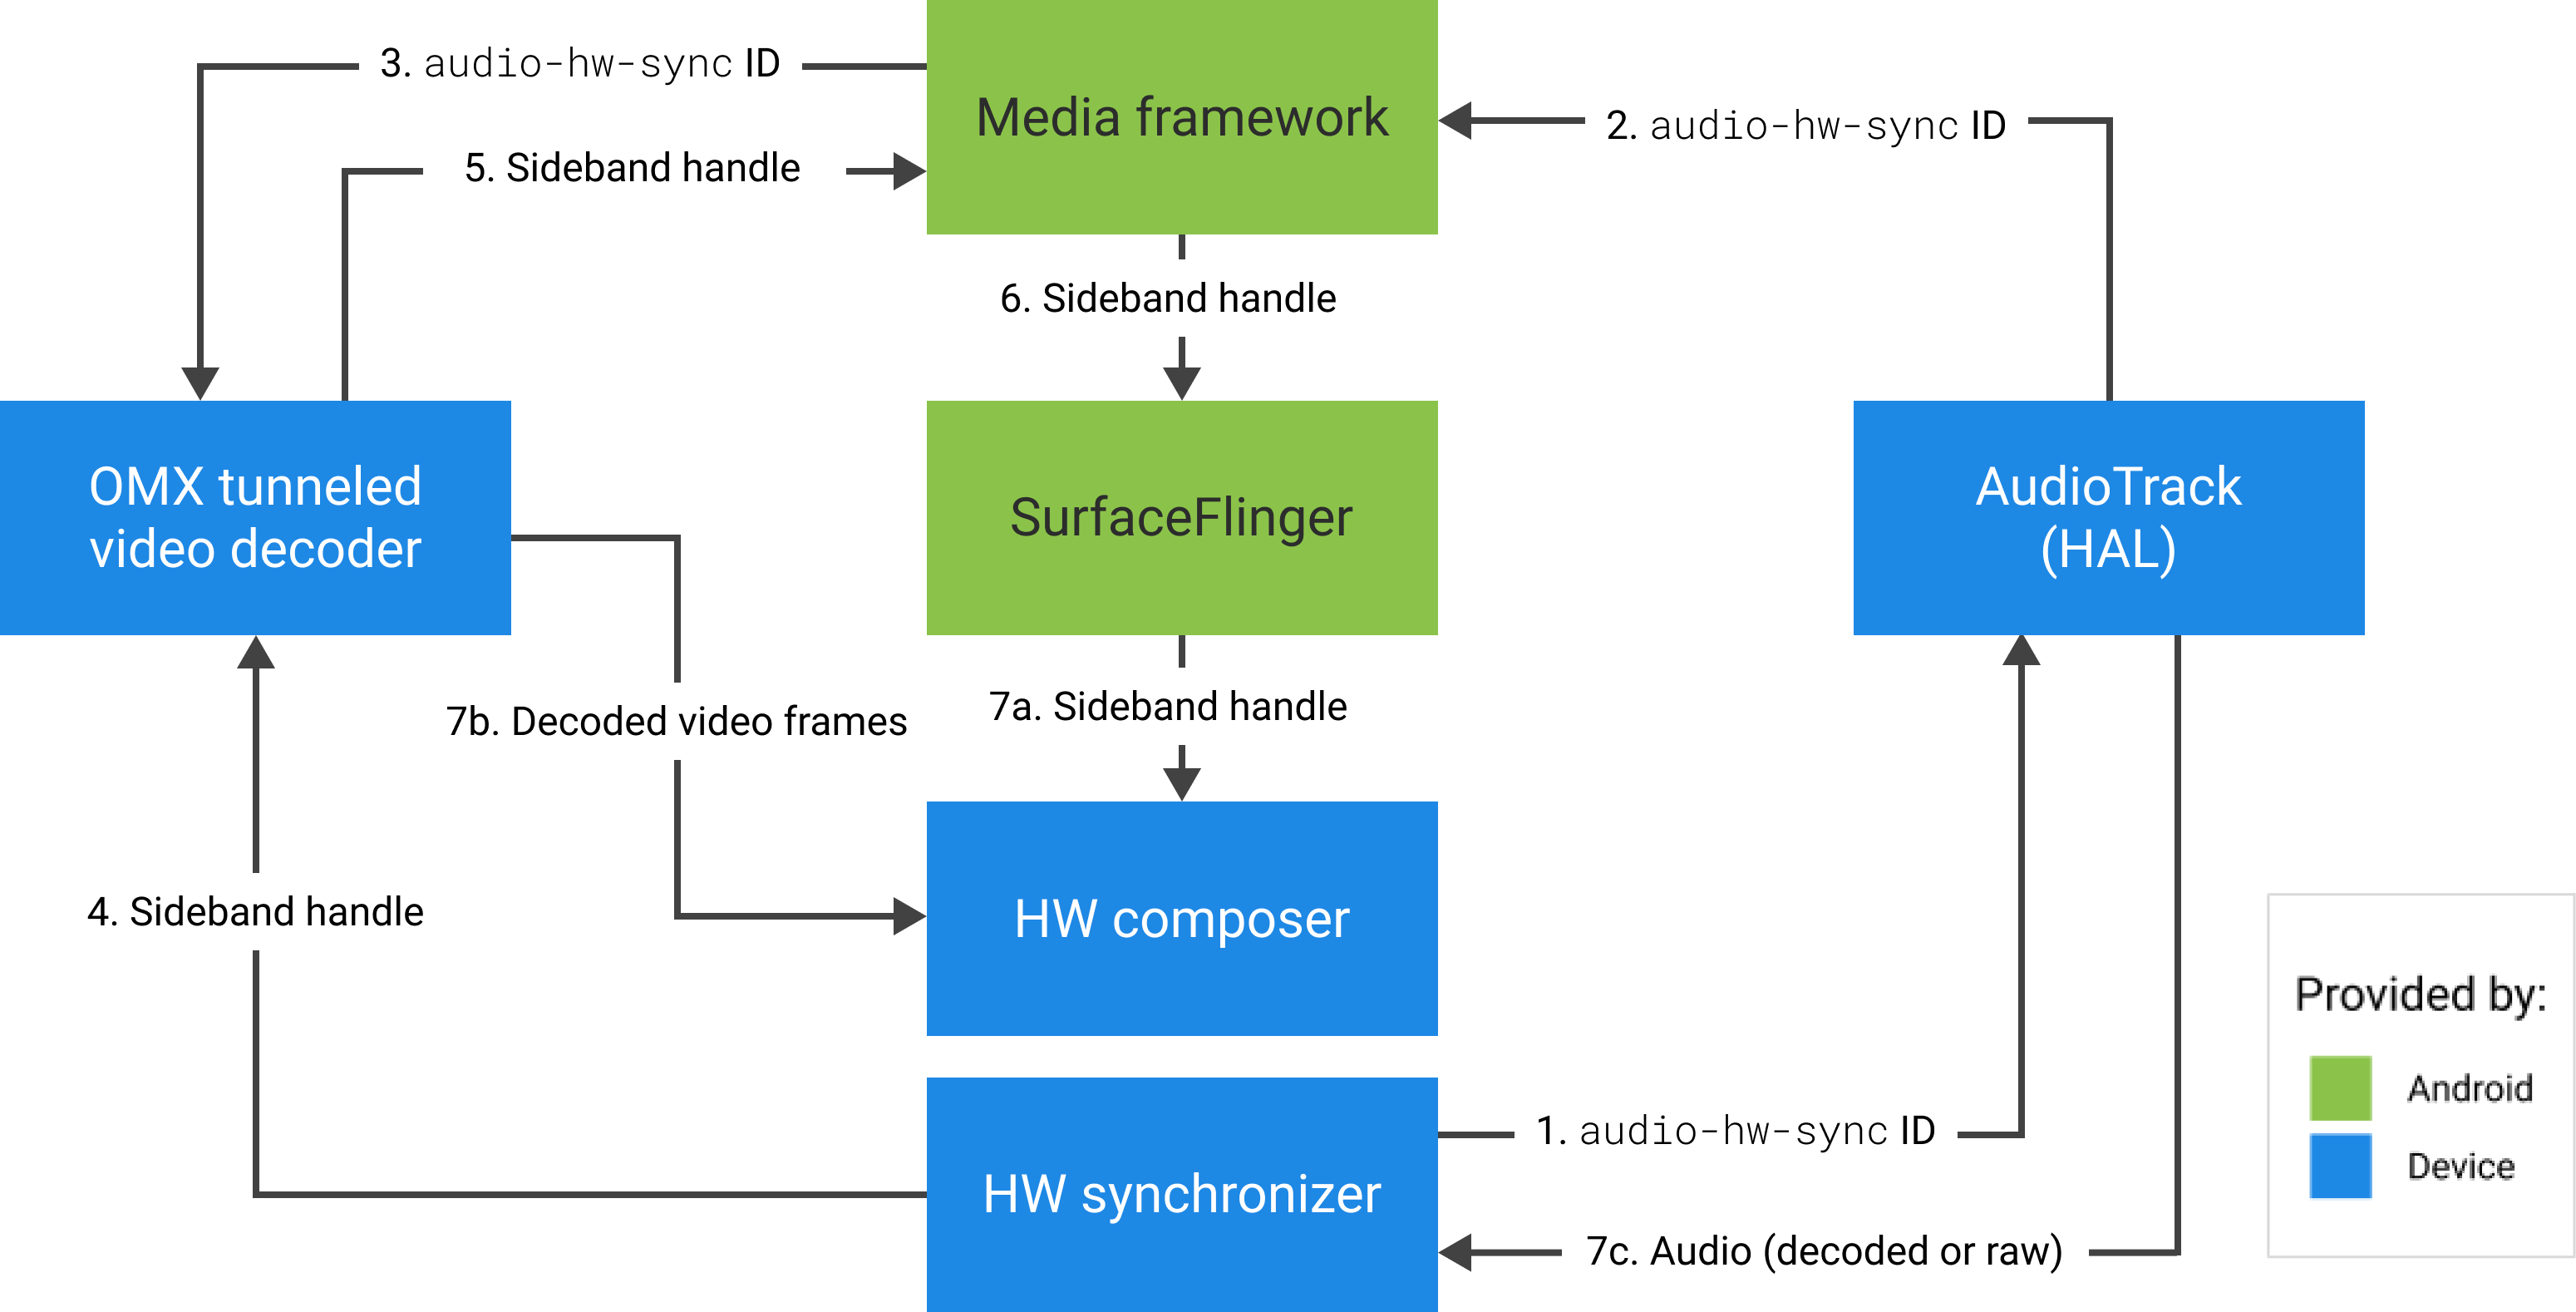 HWC combines video frames based on audio